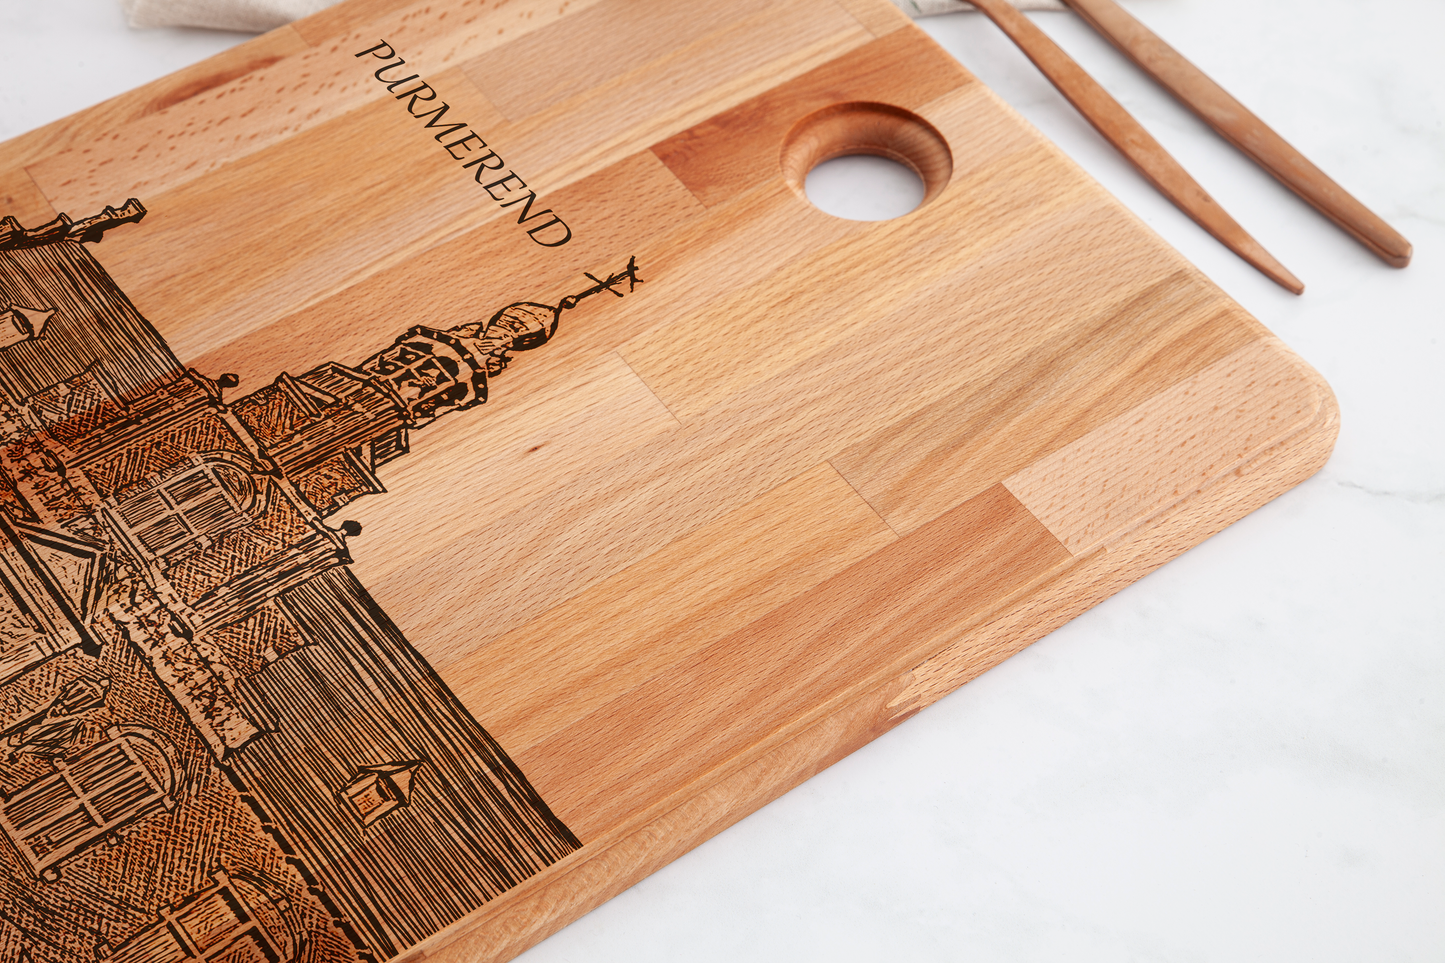 Purmerend, Stadhuis, cutting board, wood grain